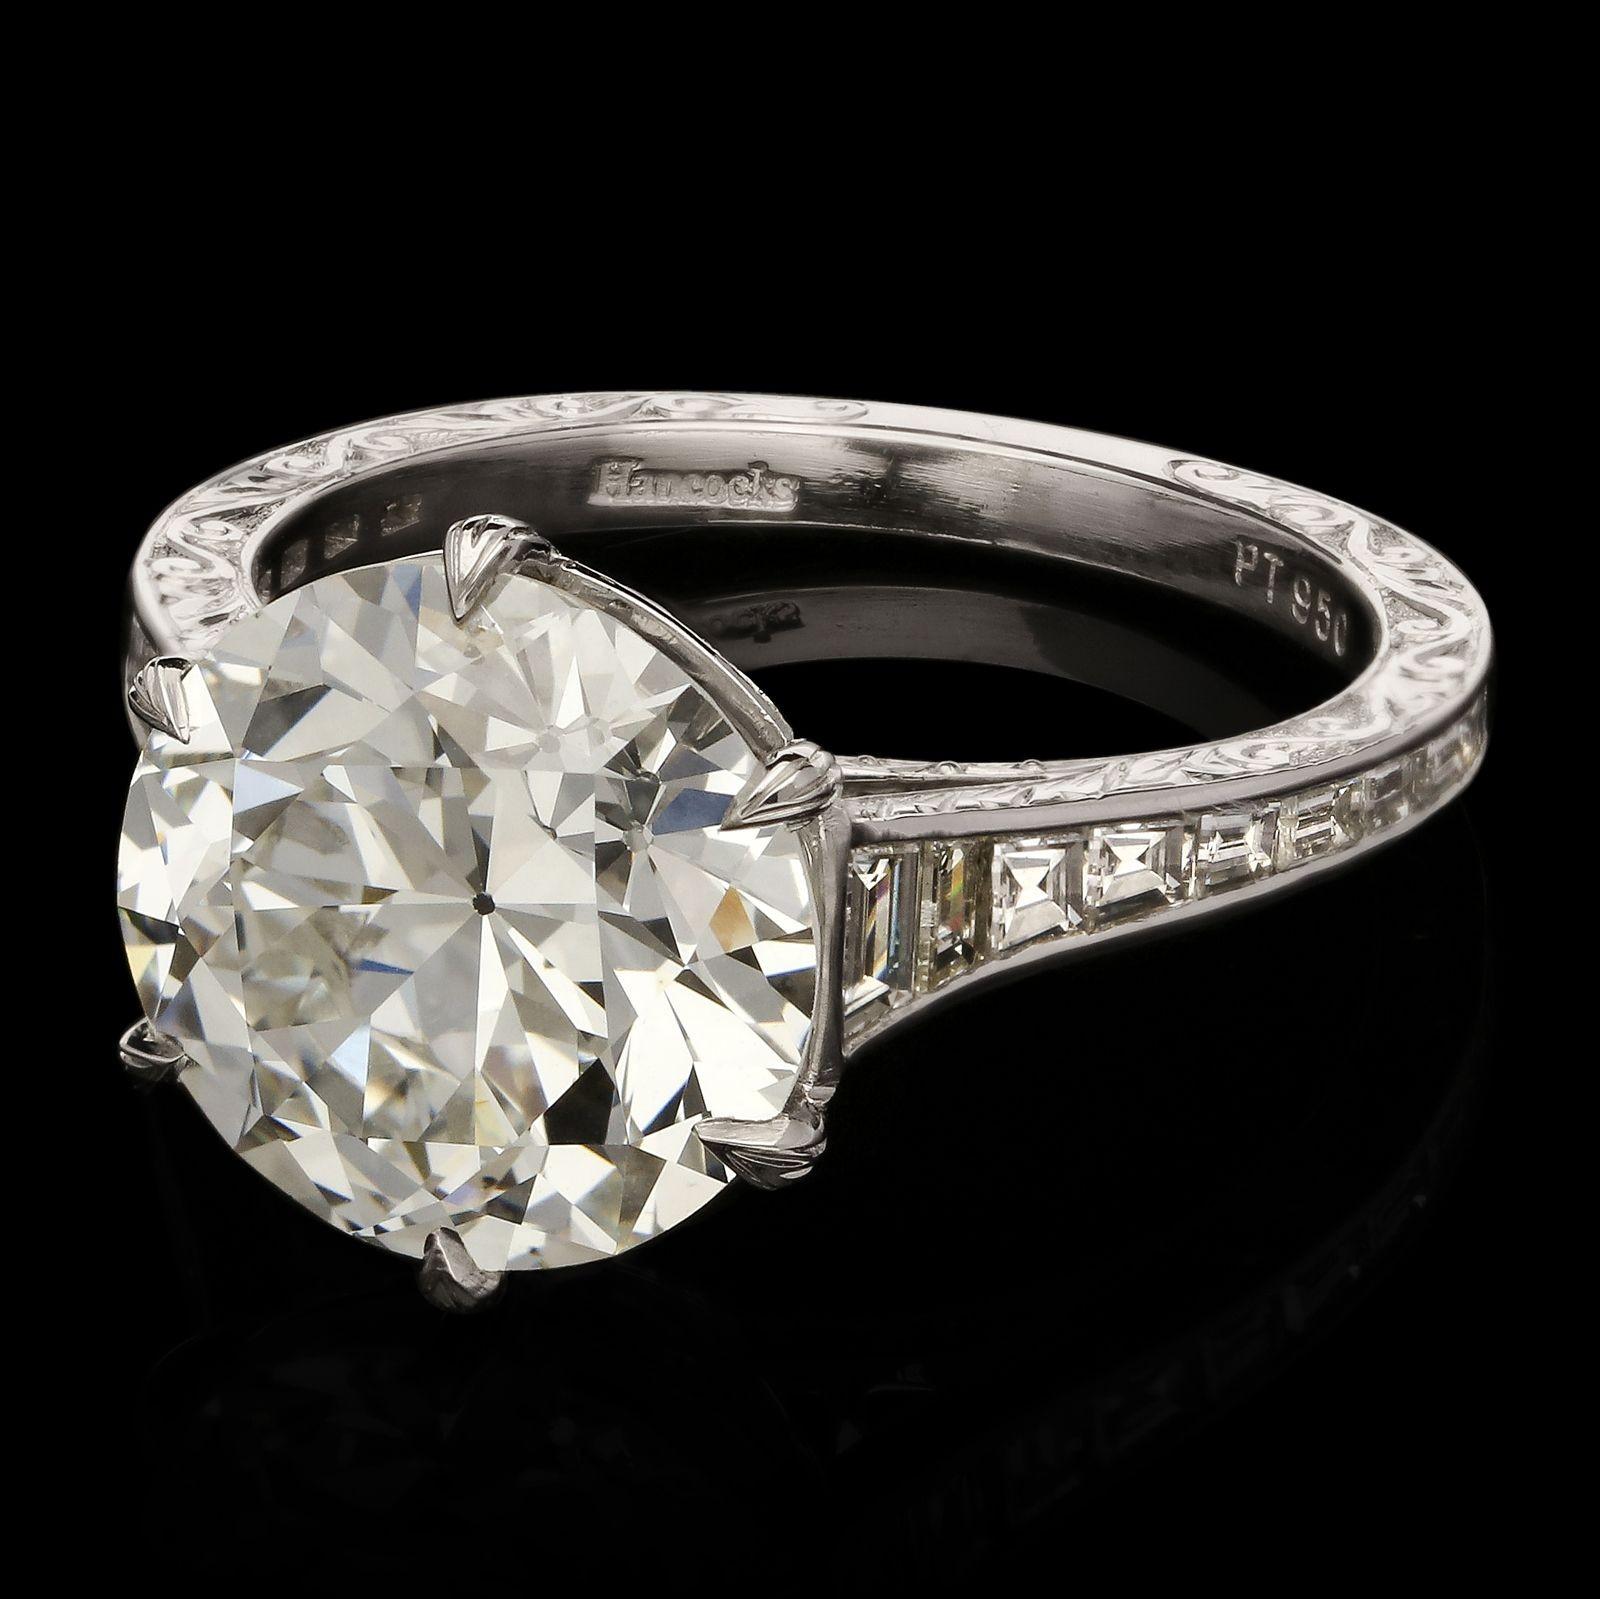 Hancocks 4.23ct Old European Brilliant Cut Diamond Ring in Platinum Contemporary In New Condition For Sale In London, GB